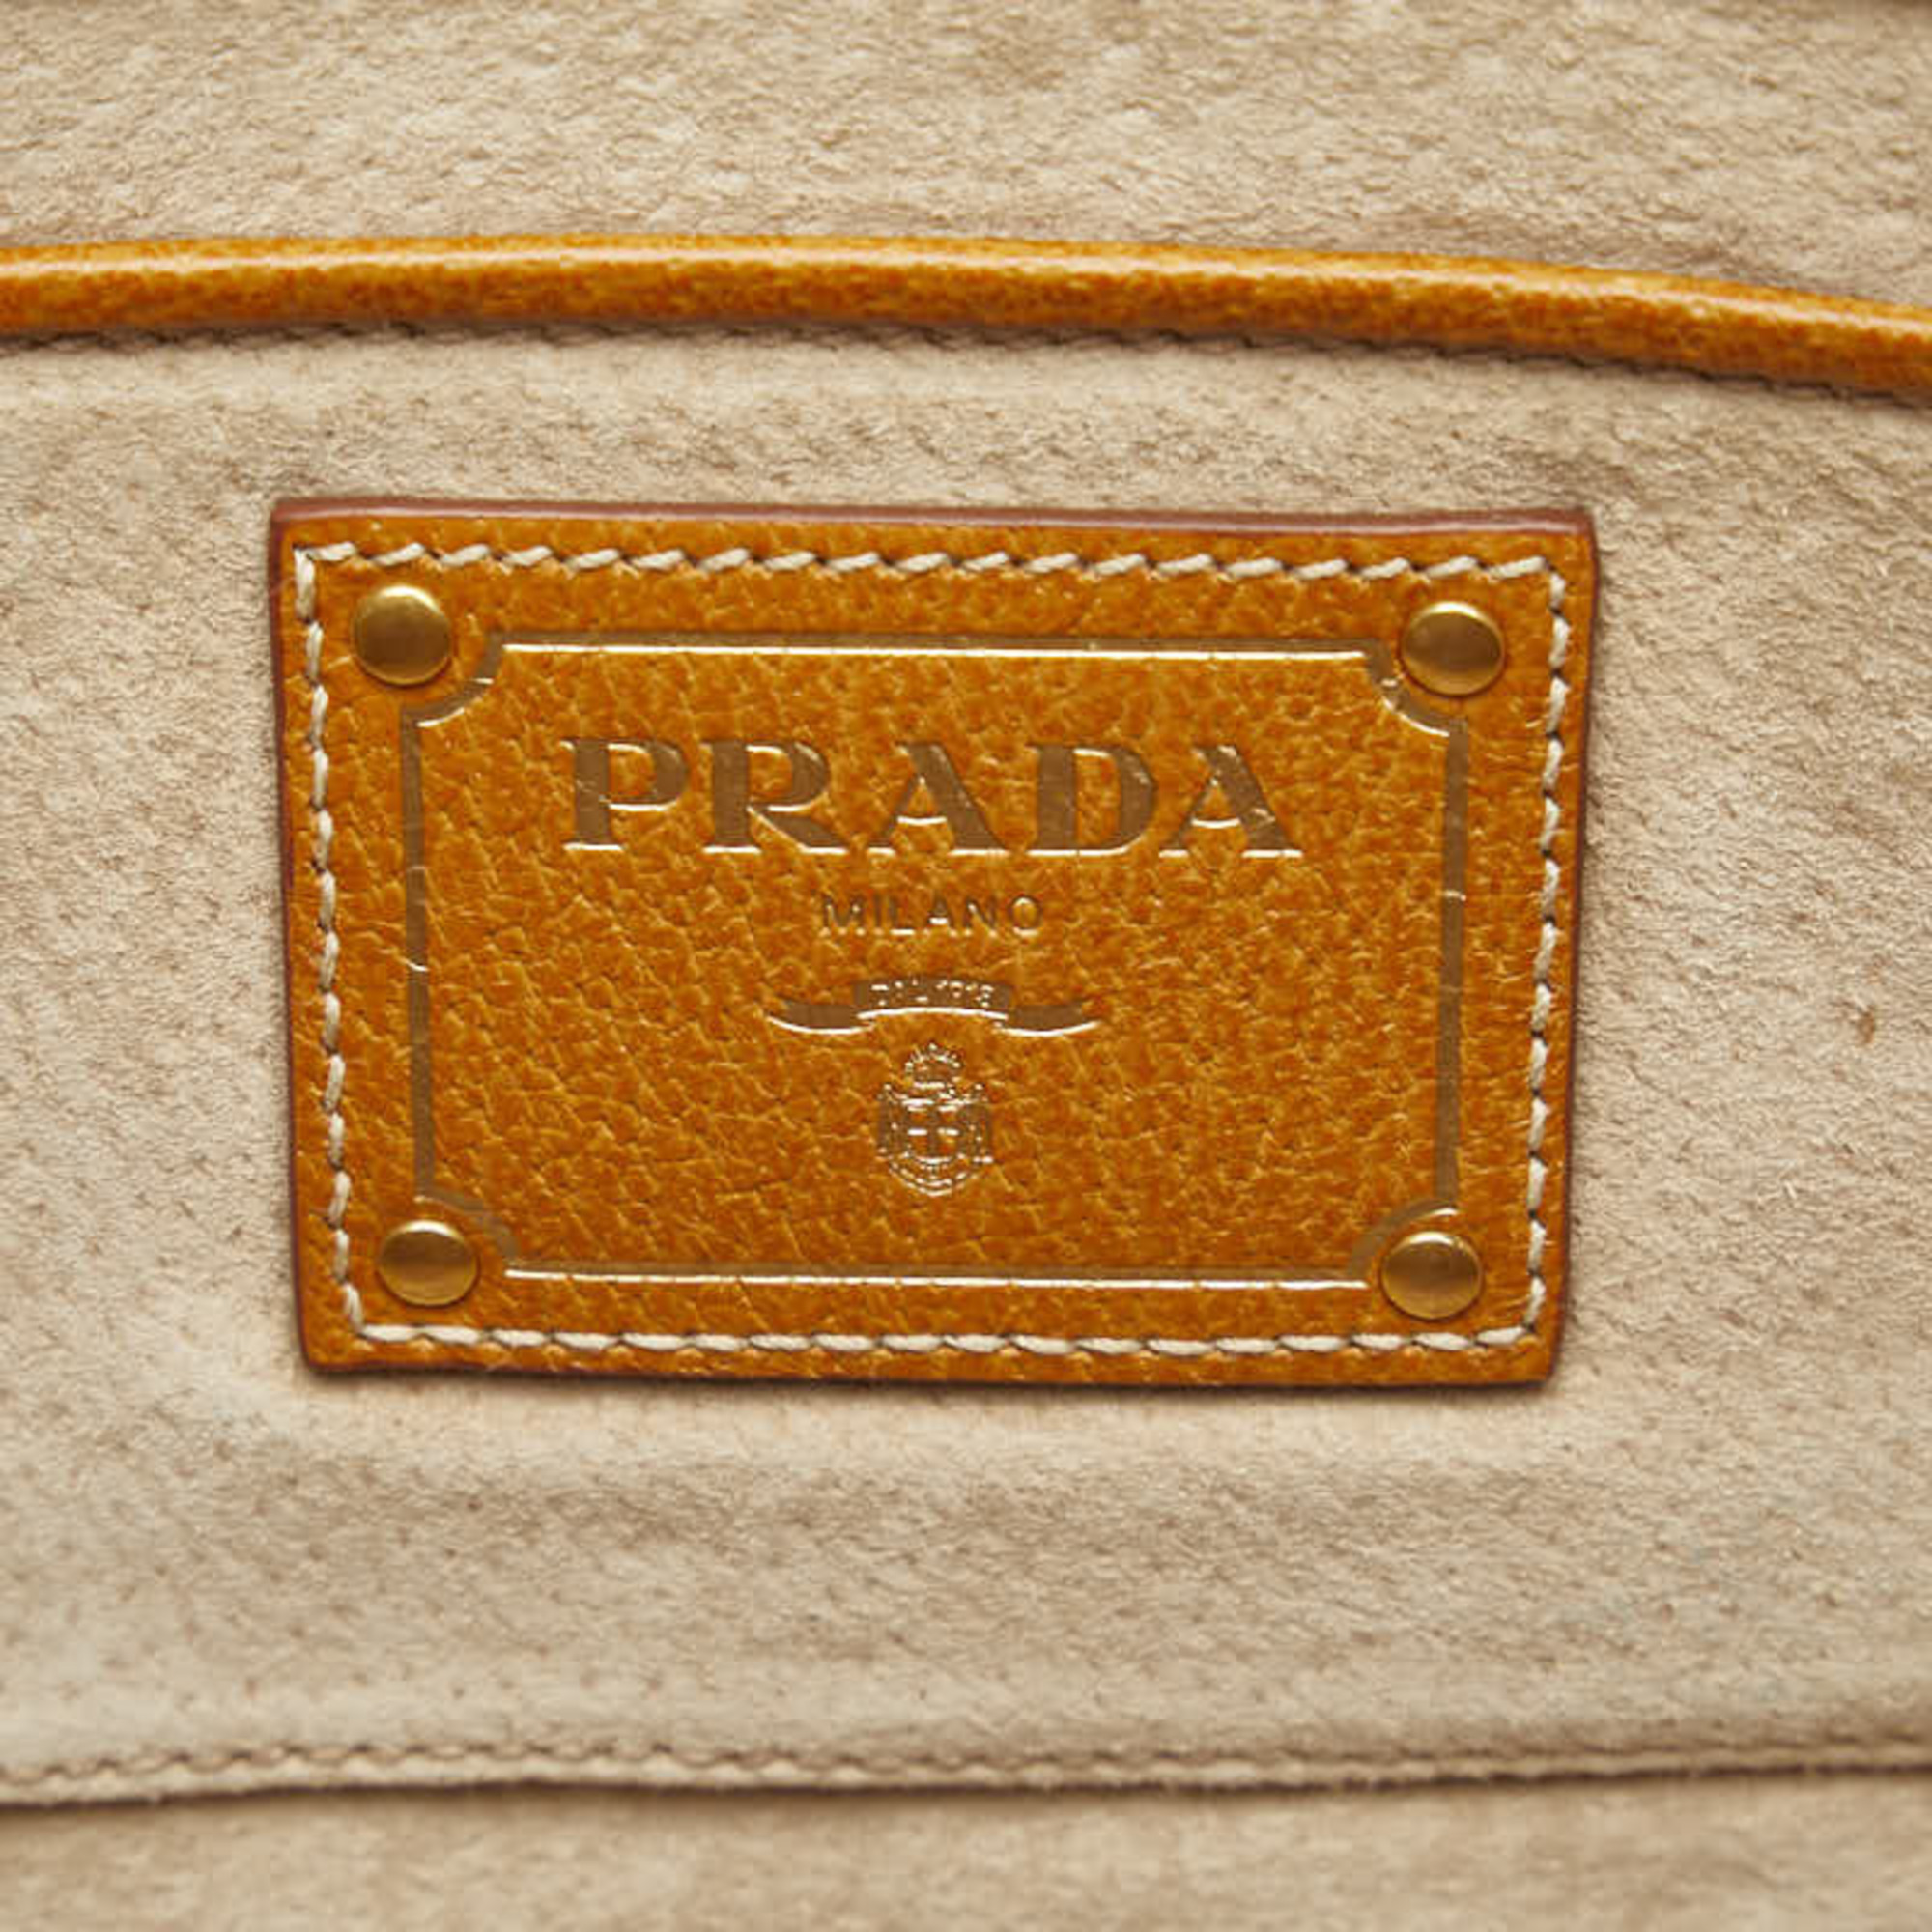 Prada Handbag Shoulder Bag BT0433 Beige Canvas Leather Women's PRADA